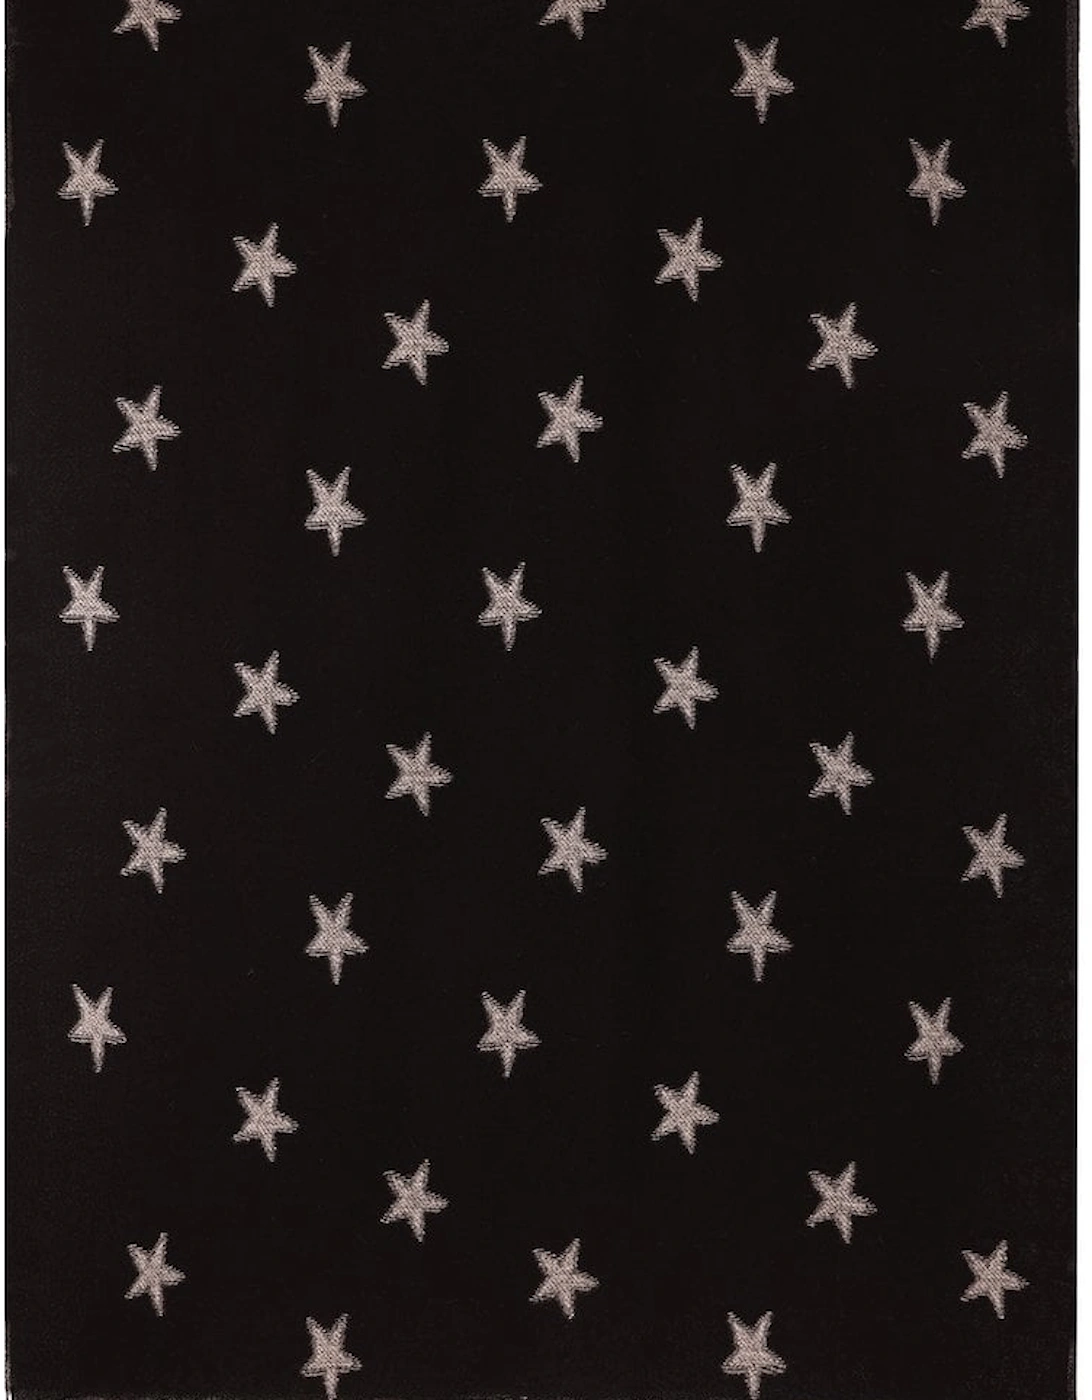 Cashmere Blend Star Design Scarf / Wrap